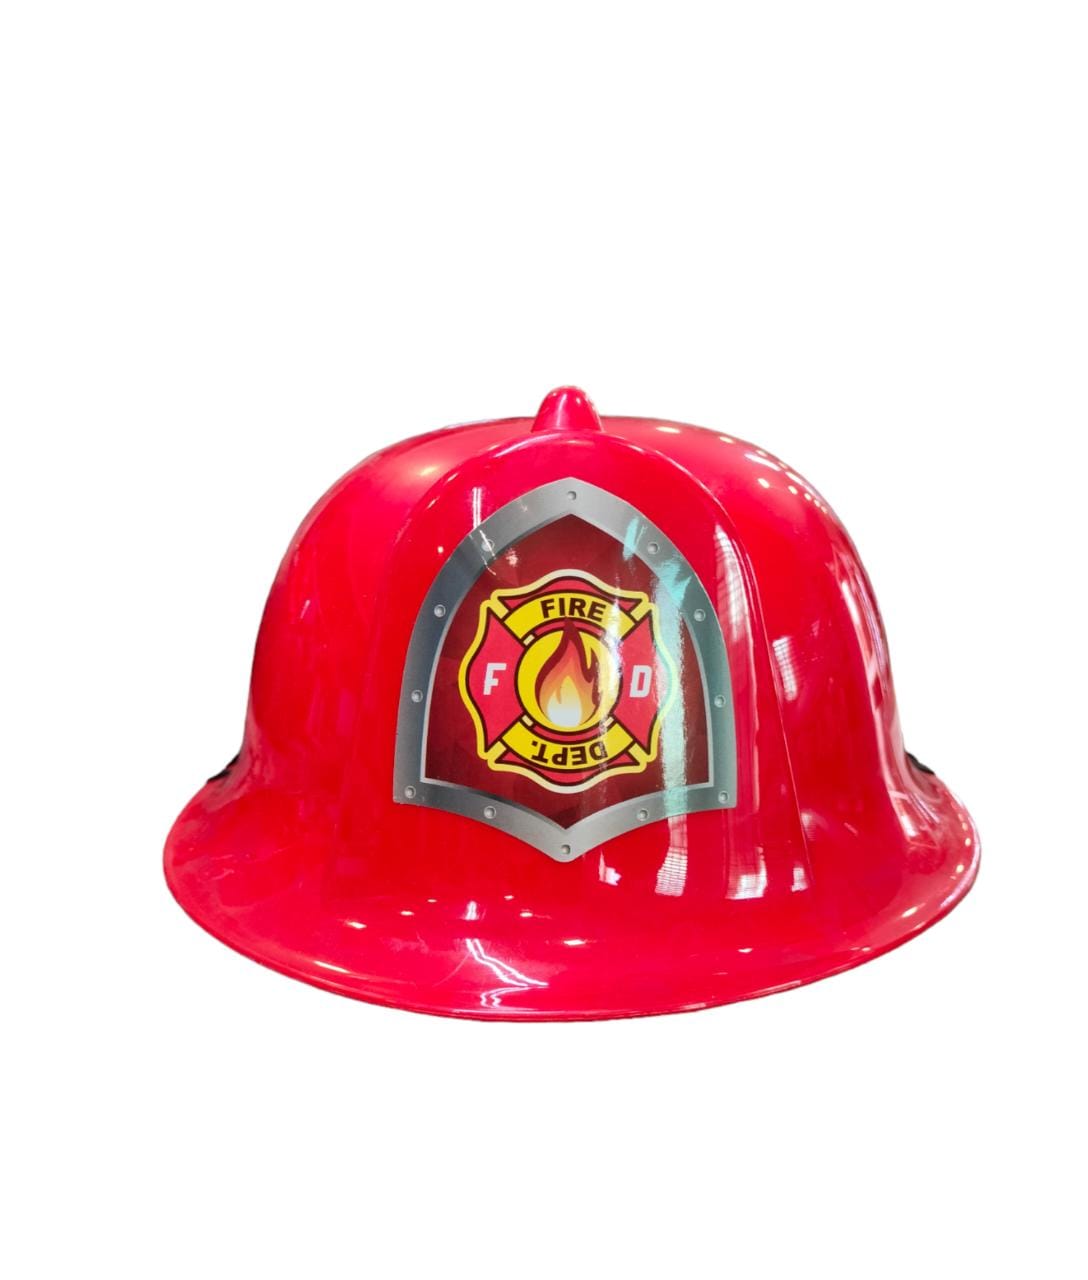 Kids Fire Department Helmet Soft Plastic